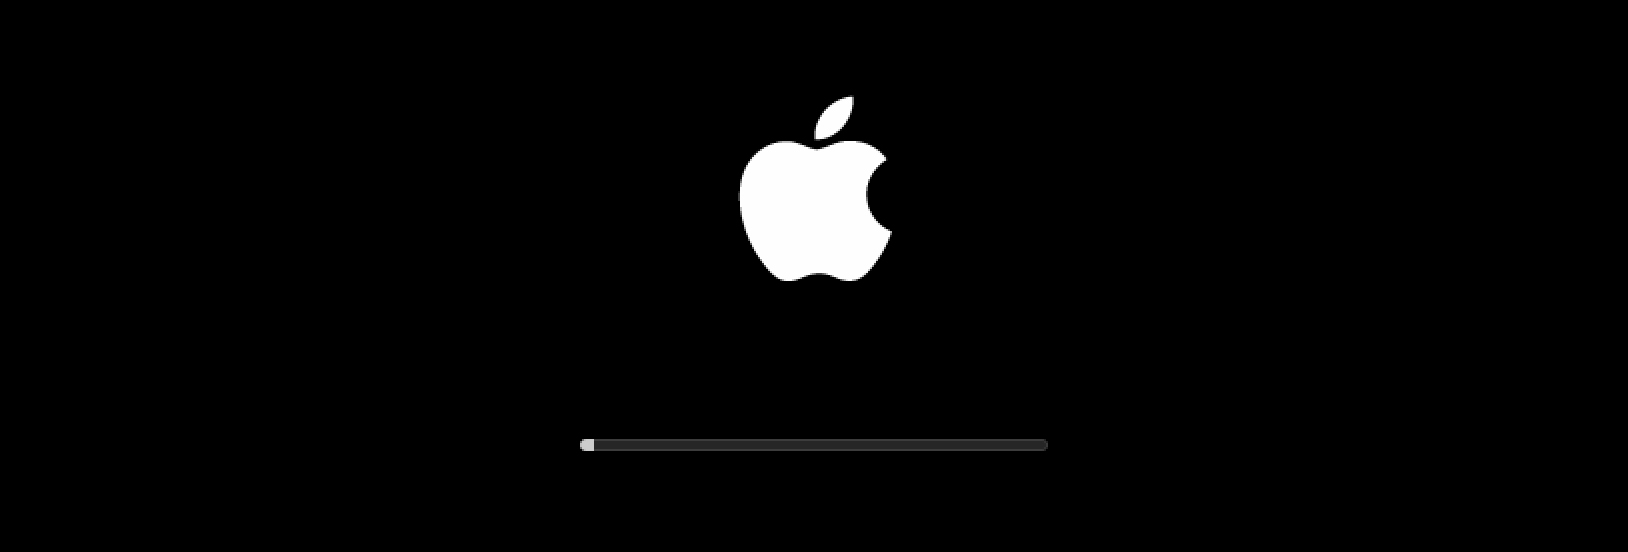 apple logo screen